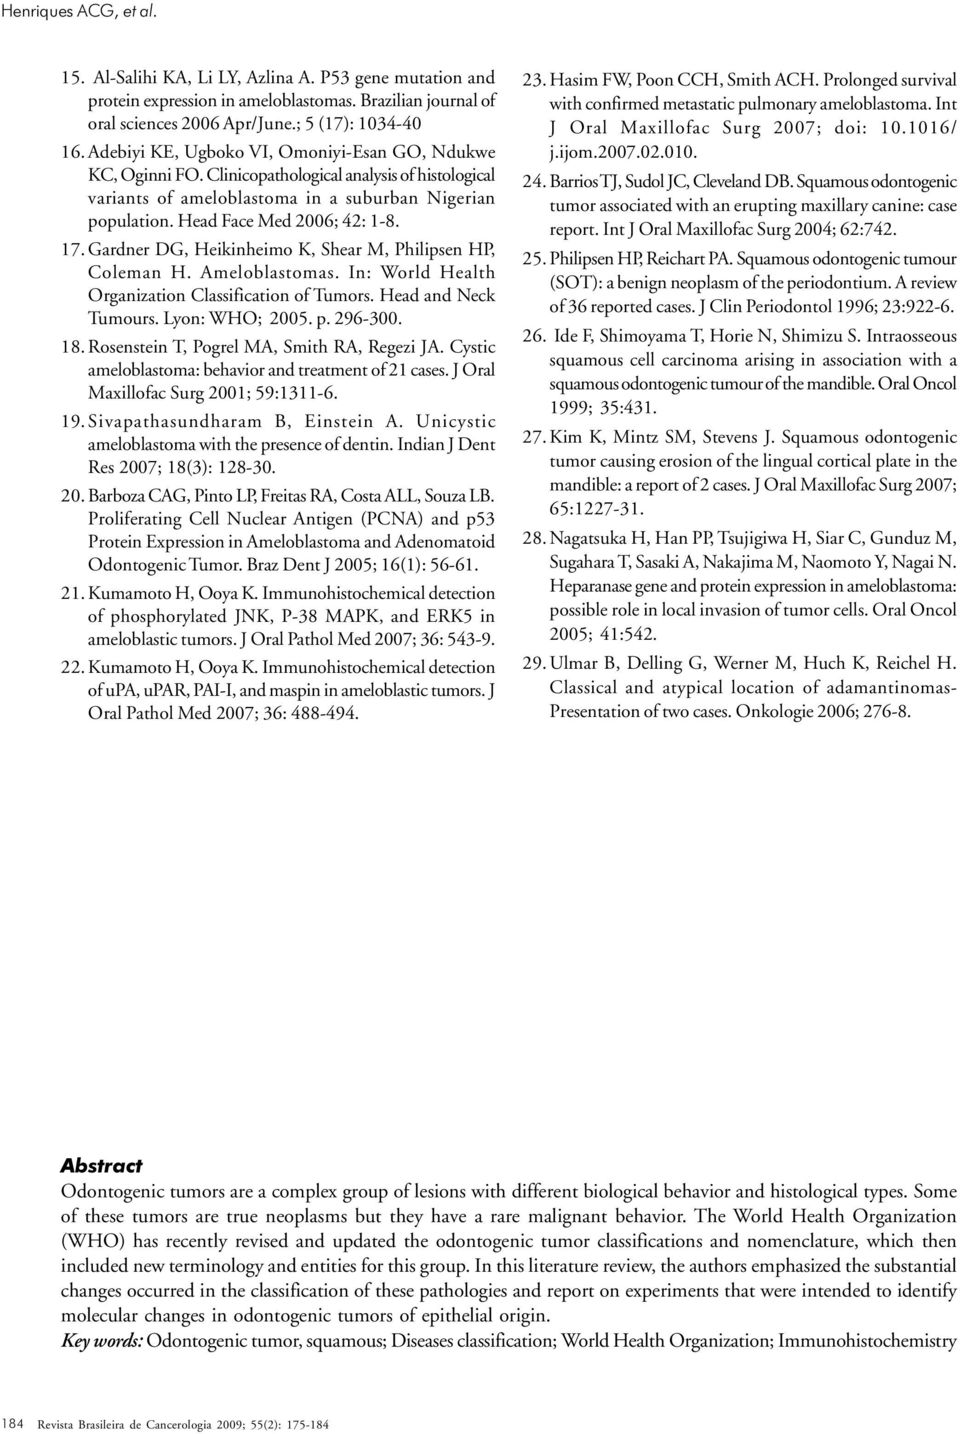 Gardner DG, Heikinheimo K, Shear M, Philipsen HP, Coleman H. Ameloblastomas. In: World Health Organization Classification of Tumors. Head and Neck Tumours. Lyon: WHO; 2005. p. 296-300. 18.